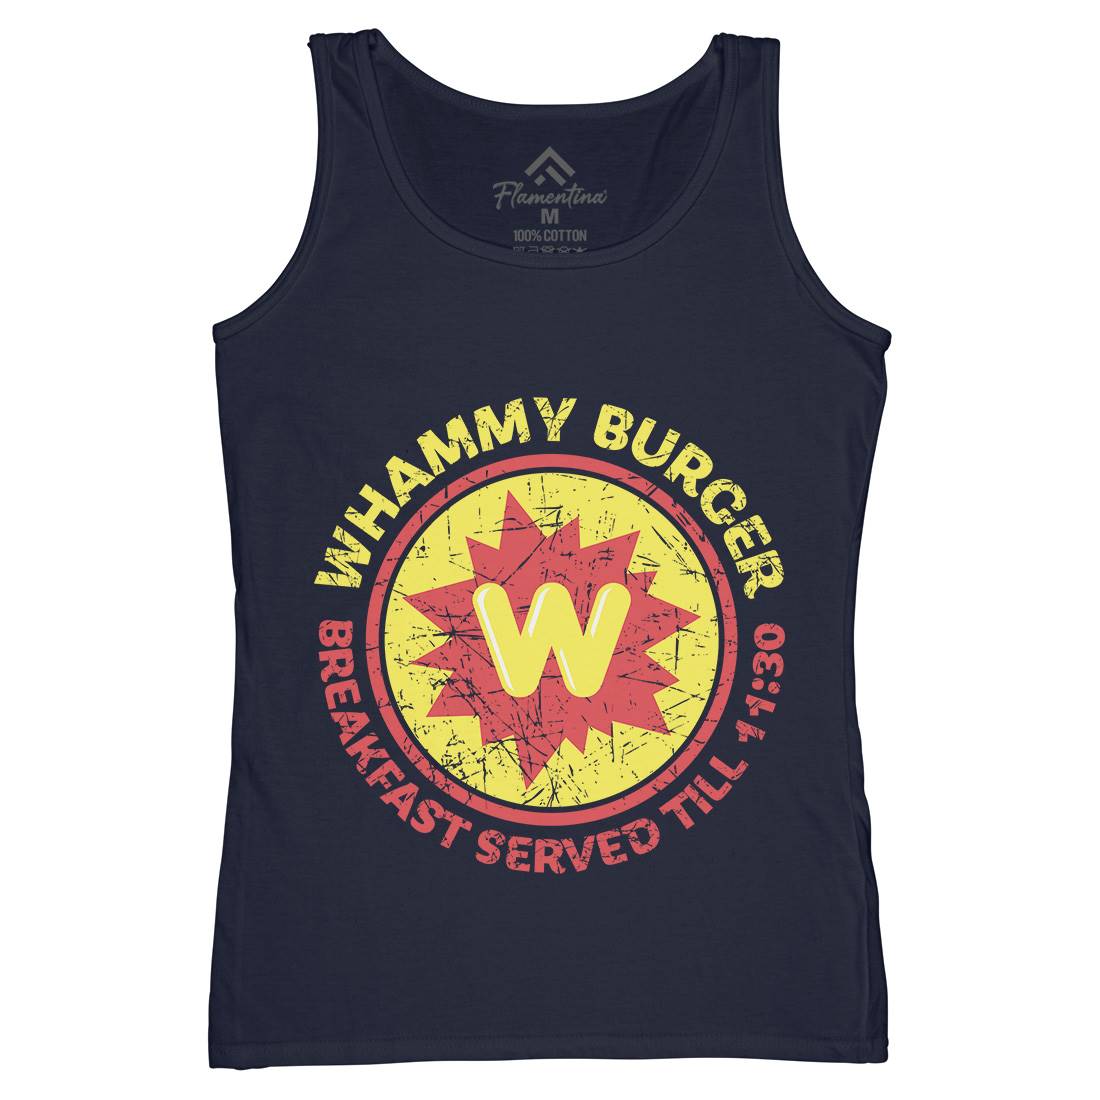 Whammy Burger Womens Organic Tank Top Vest Food D286